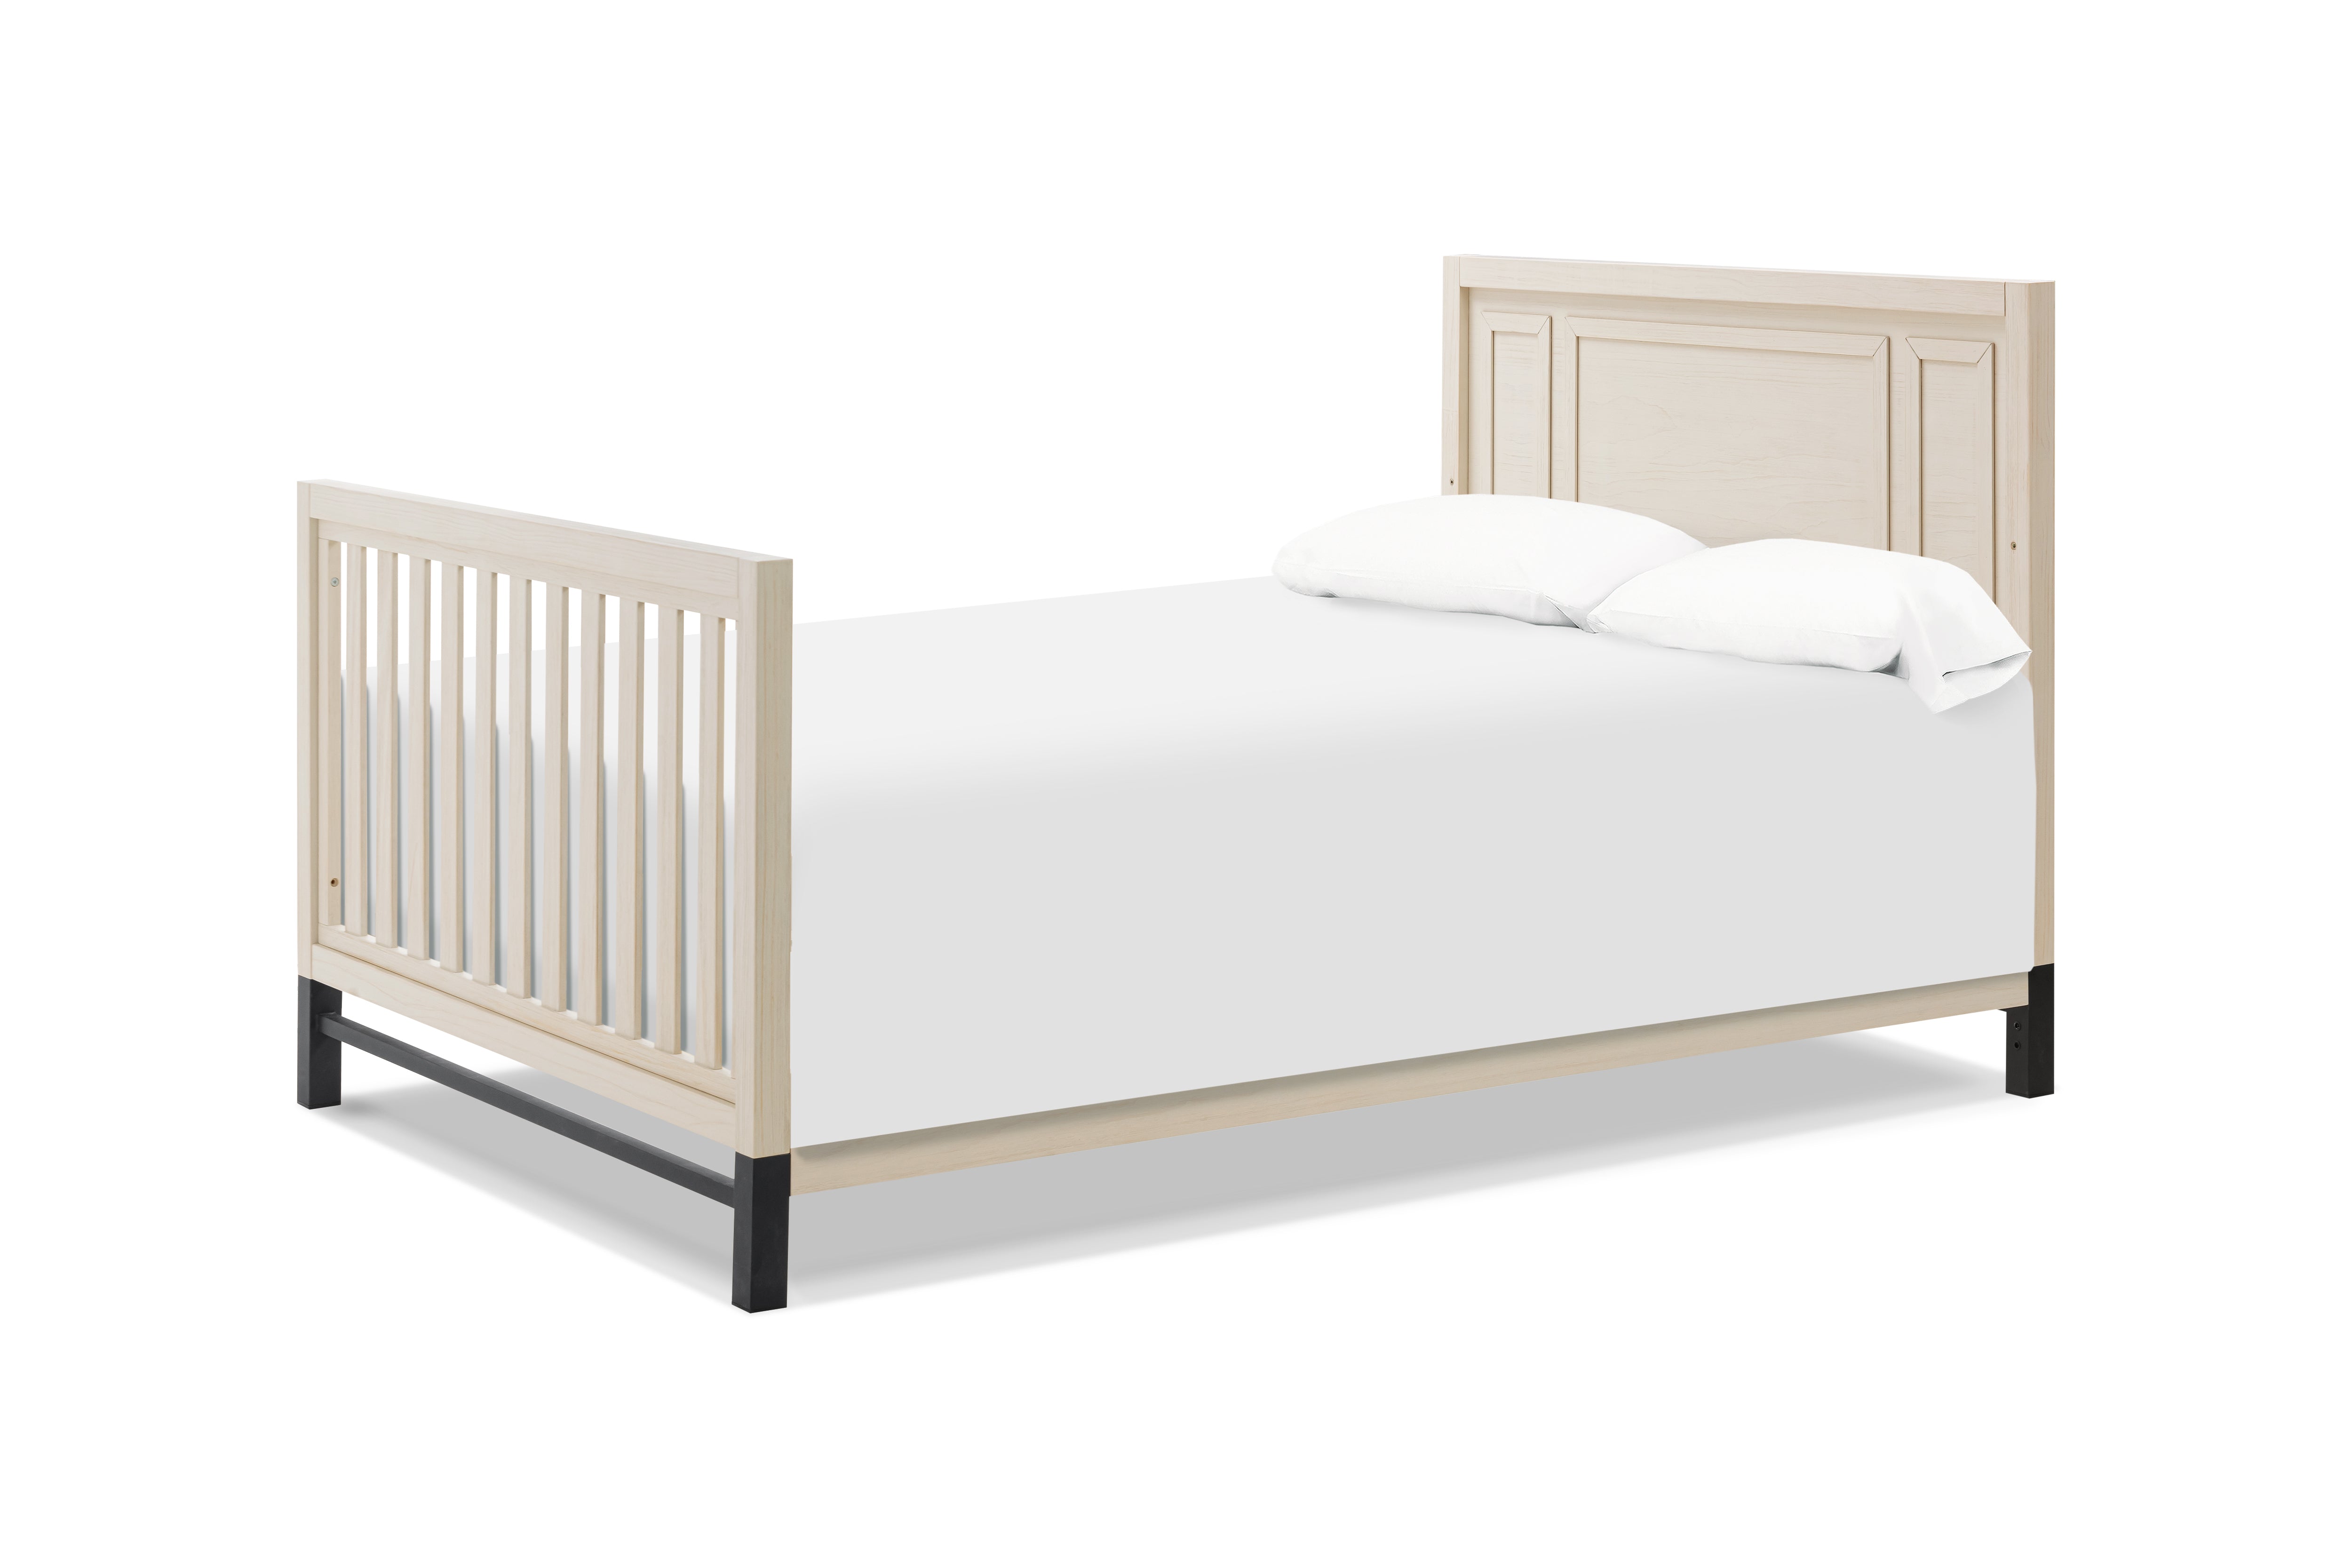 Newbern 4-in-1 Convertible Crib - White Driftwood - Twinkle Twinkle Little One